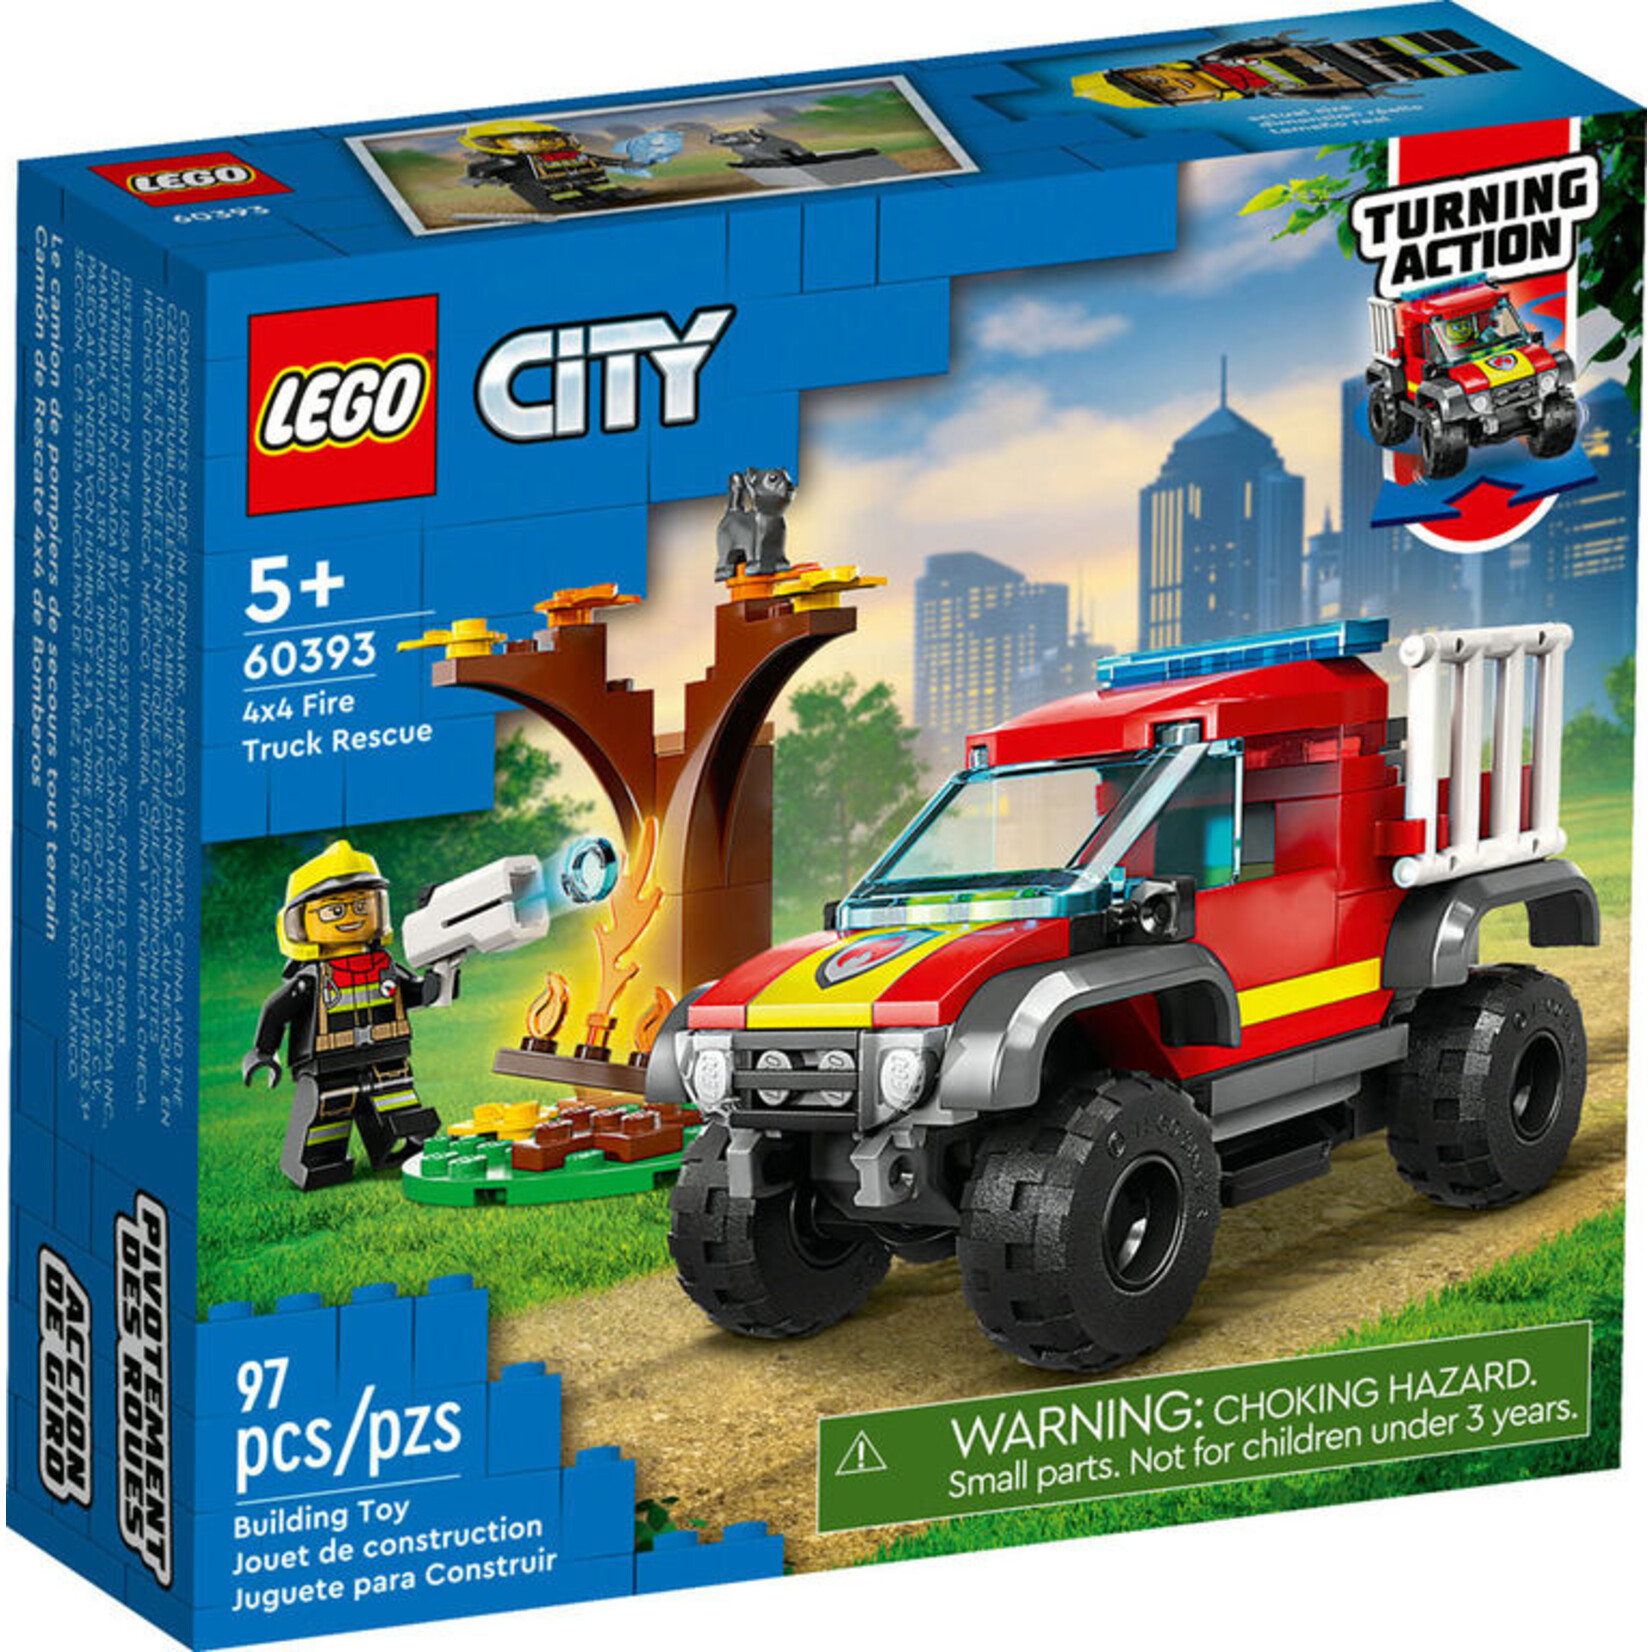 LEGO City 4x4 Fire Rescue Truck